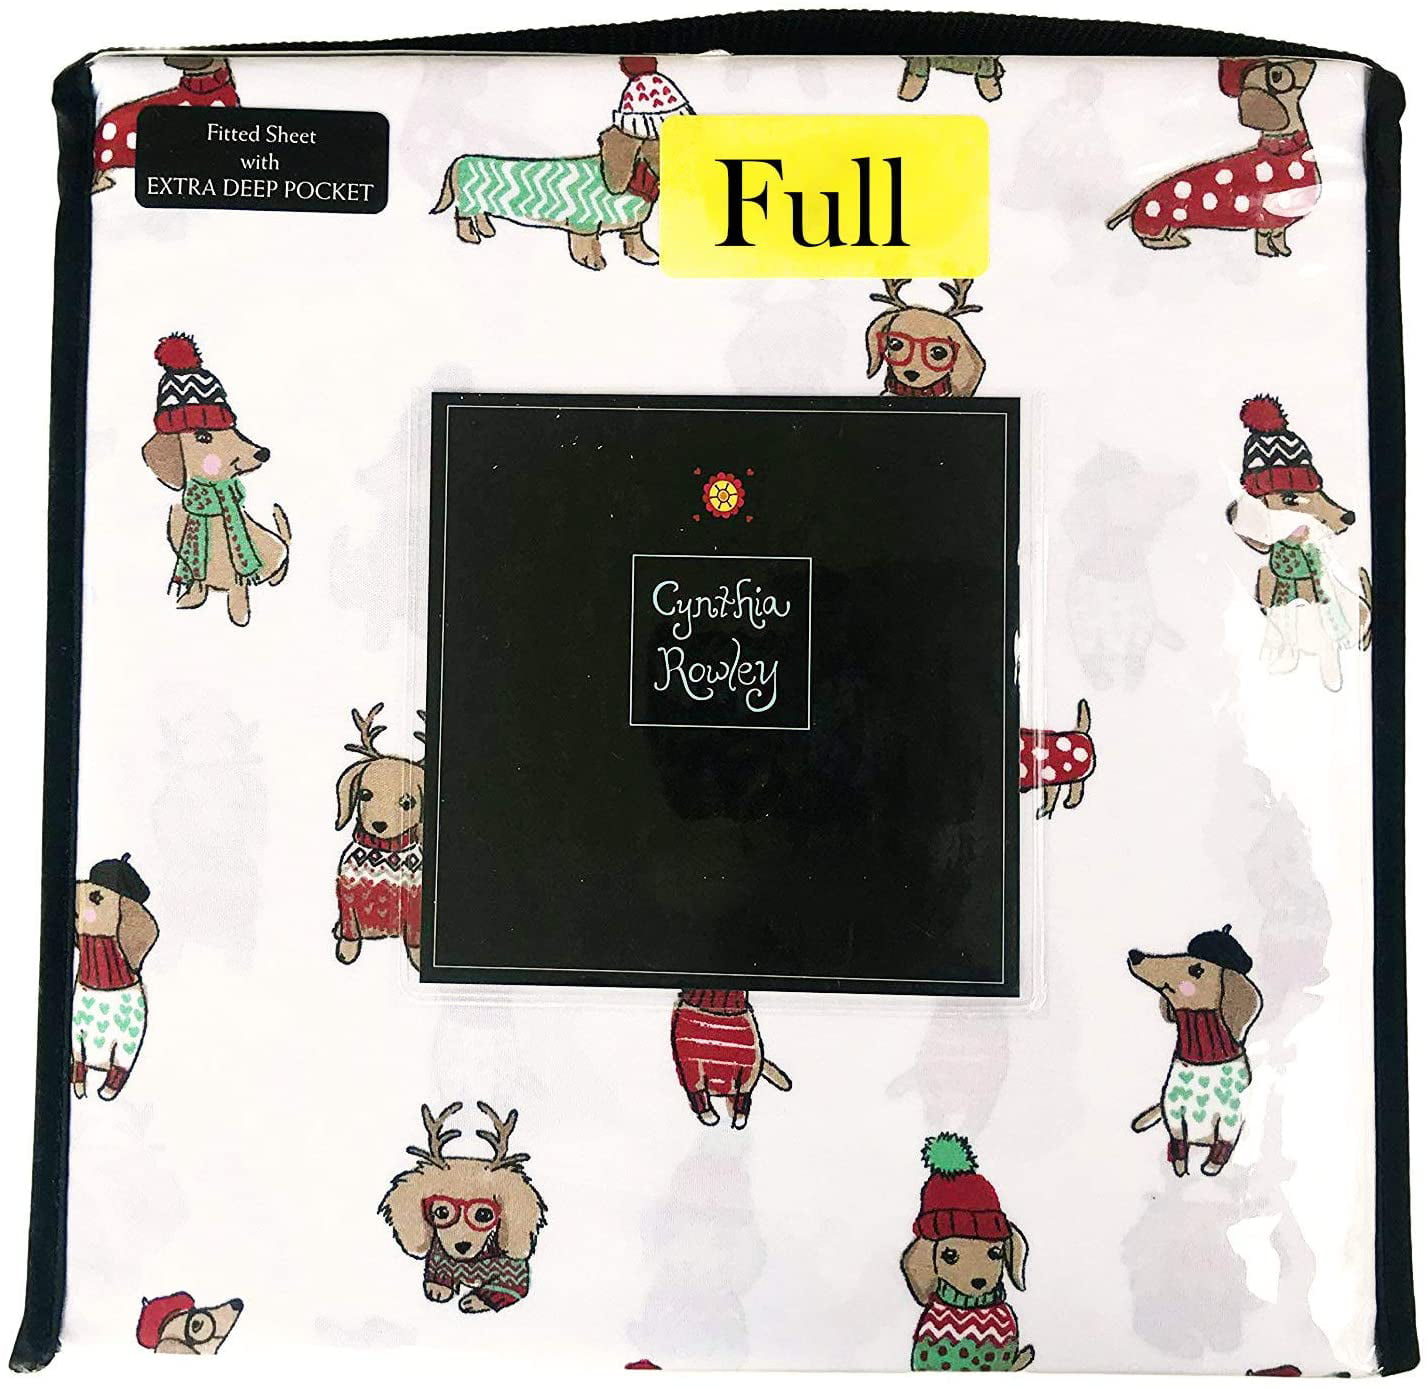 Full Cynthia Rowley New York Christmas Dachshund Dogs Flannel Sheet Set 